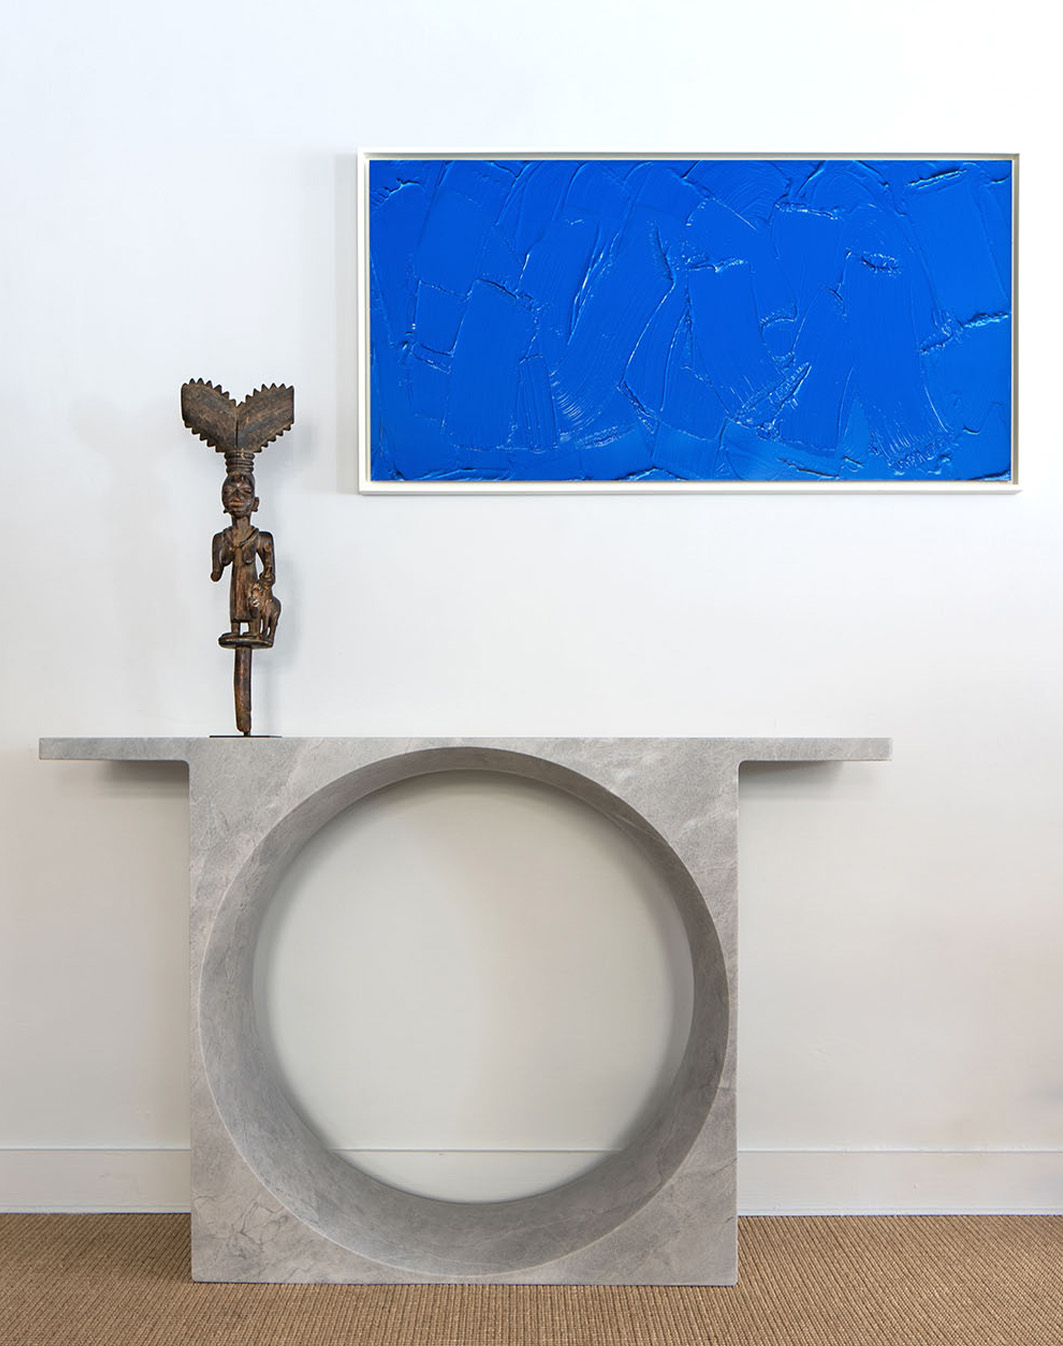 Pierre Charpin - Lucas Ratton x kamel mennour x Galerie kreo @Saint-Tropez